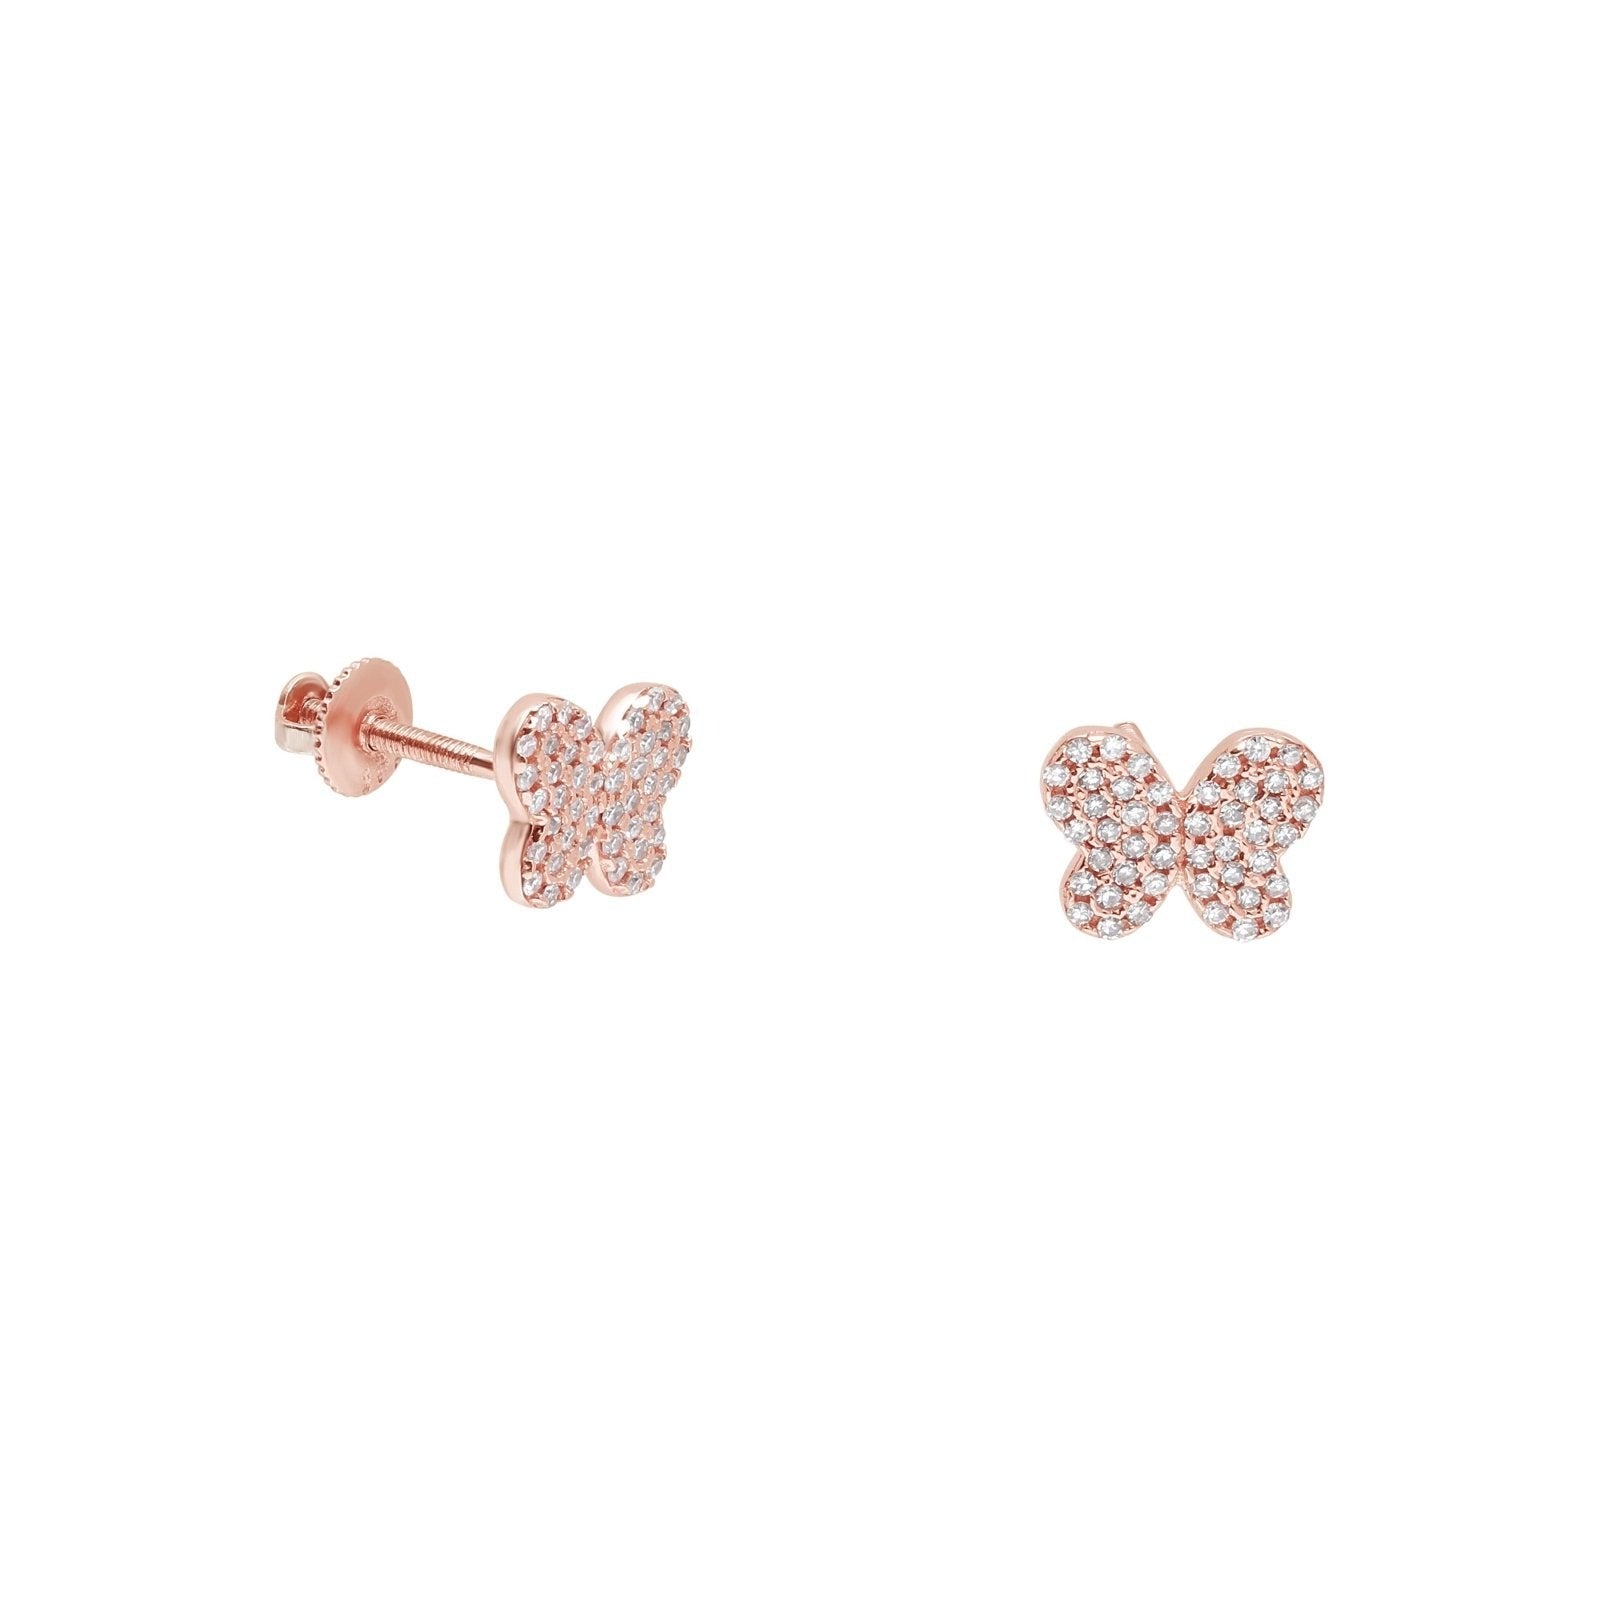 Diamond Pavé Butterfly Screw Back Earrings Earrings Estella Collection #product_description# 17692 14k Birthstone Birthstone Earrings #tag4# #tag5# #tag6# #tag7# #tag8# #tag9# #tag10#